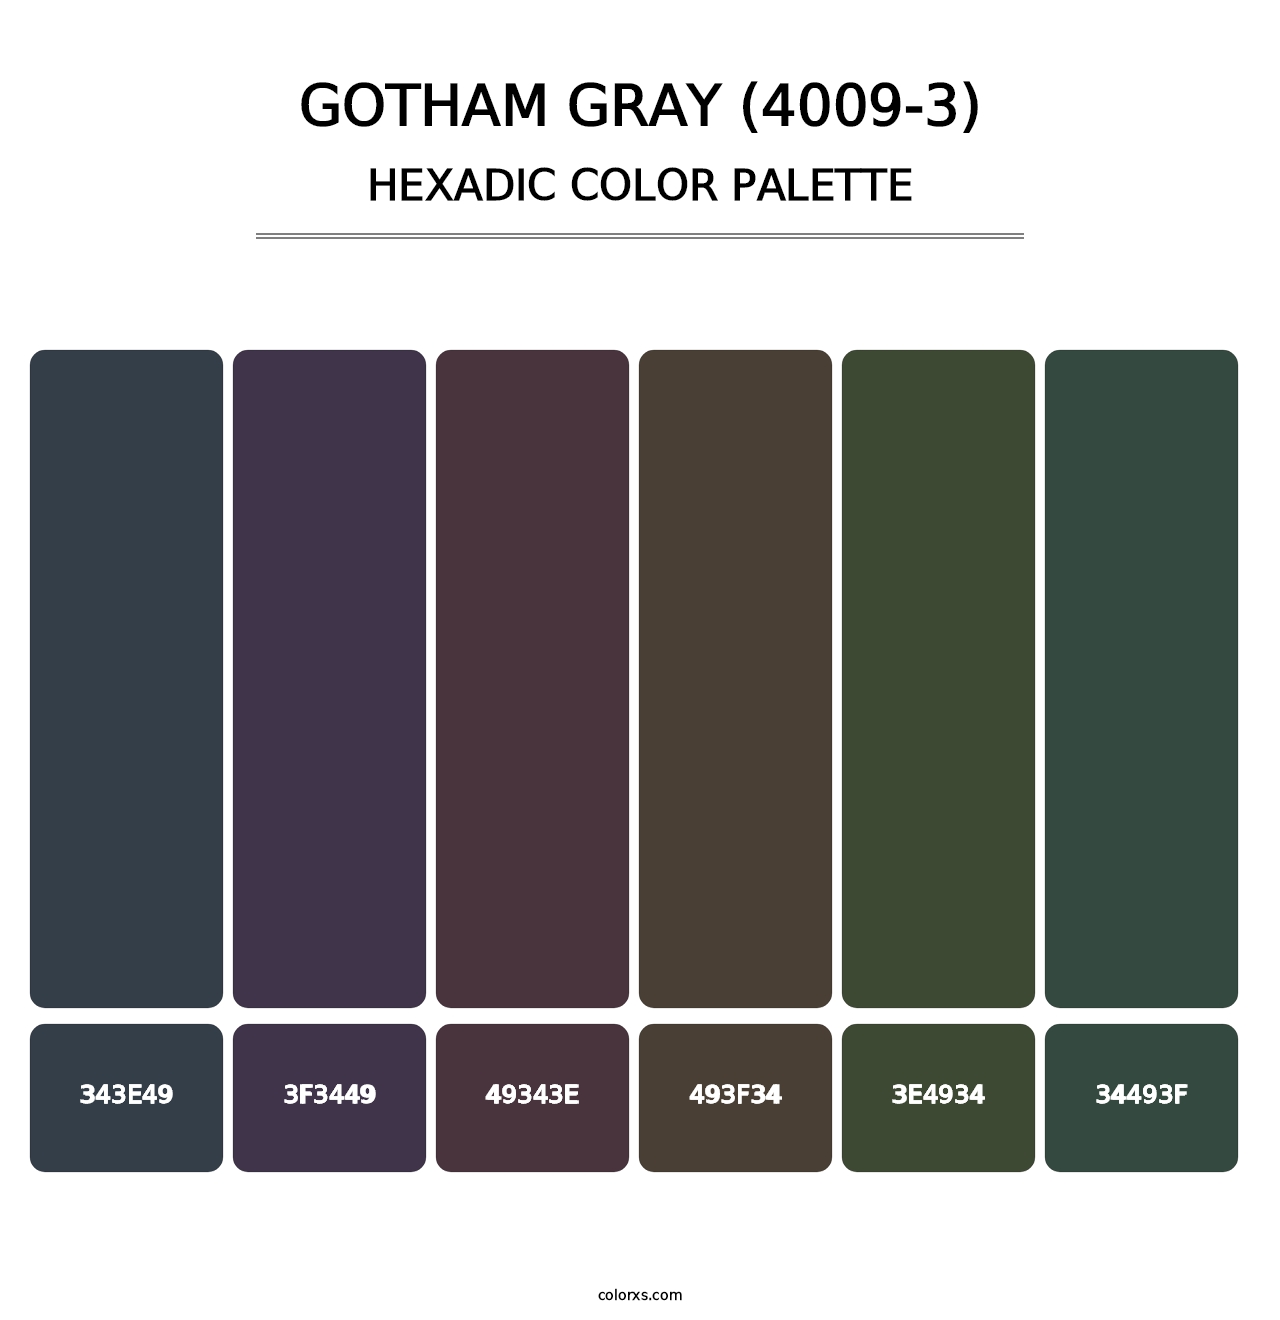 Gotham Gray (4009-3) - Hexadic Color Palette